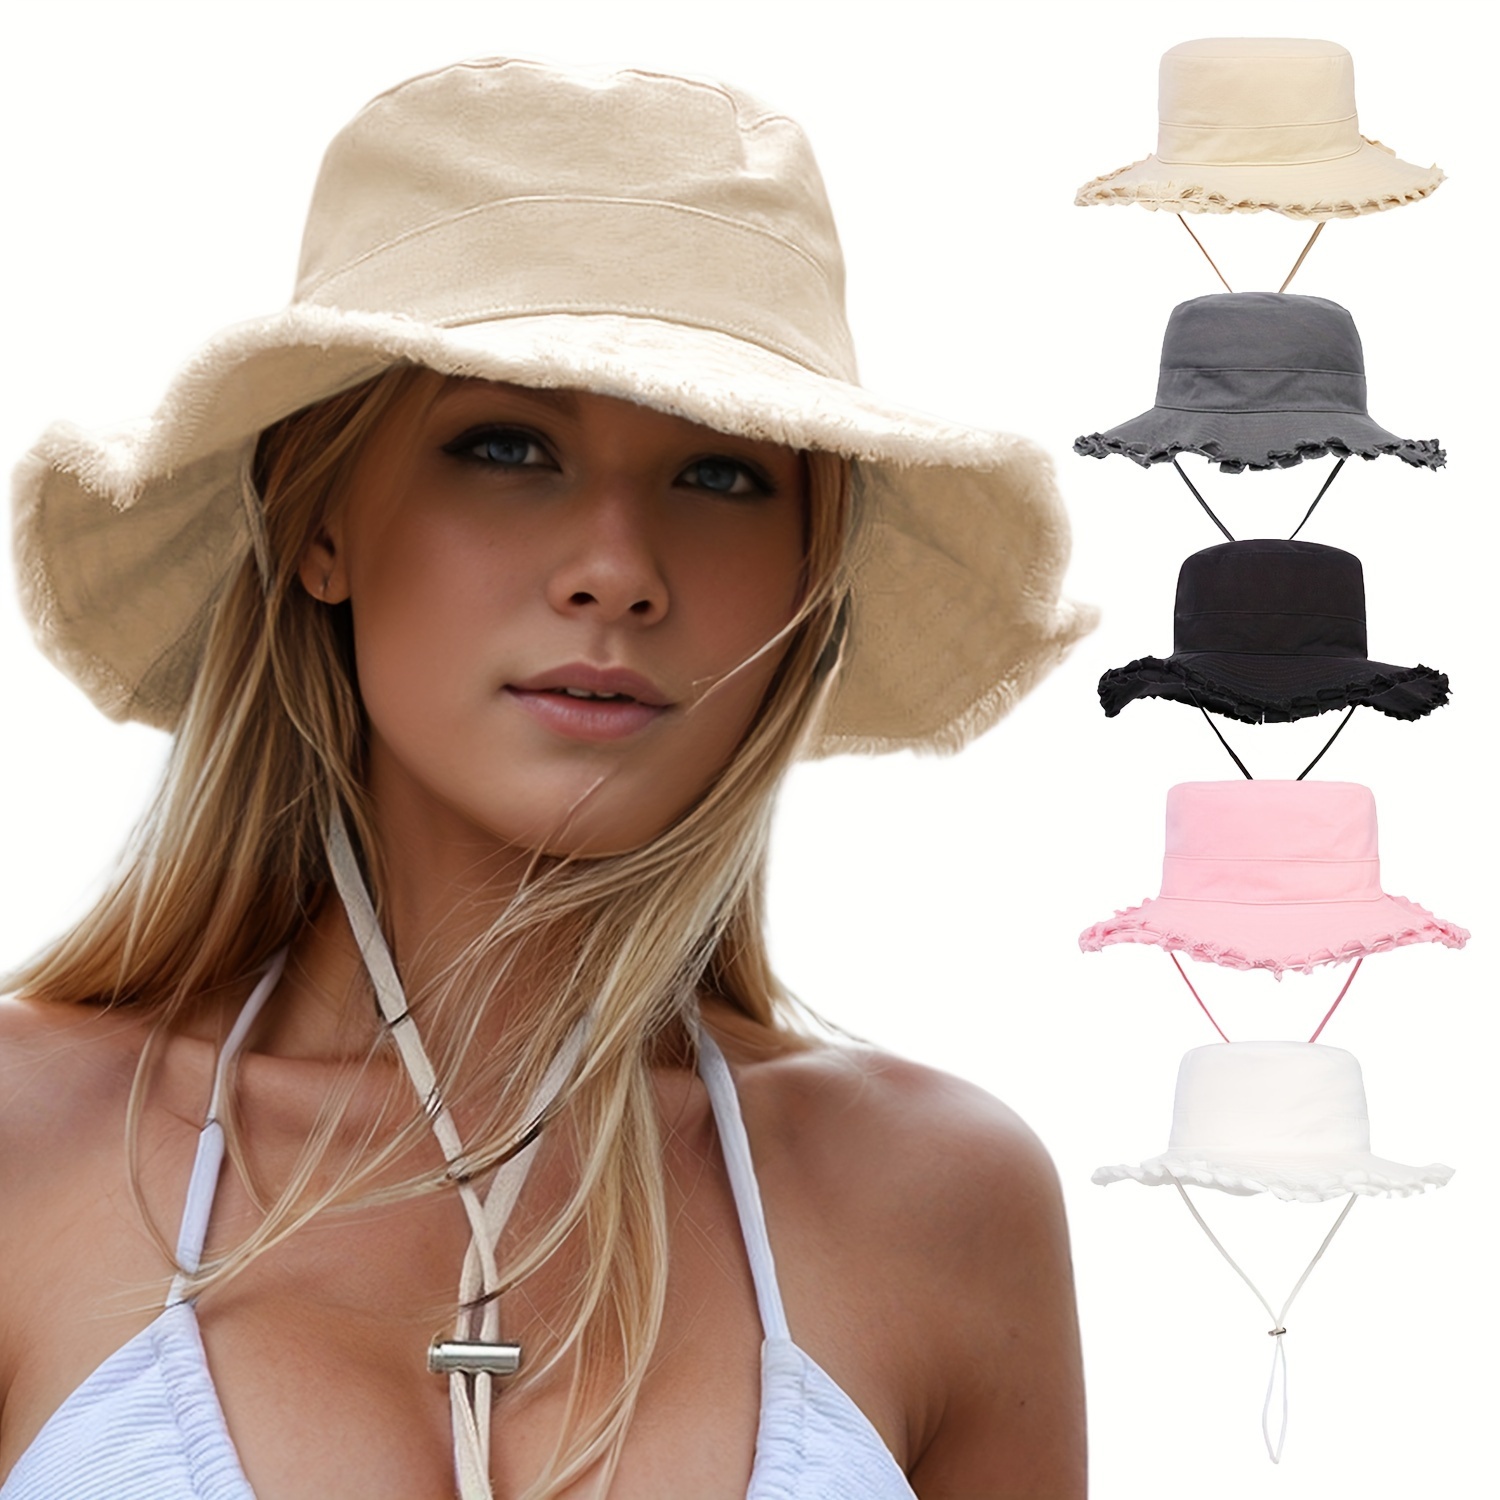 

Women's Denim Drawstring Frayed Bucket Hat, Sun Protection Outdoor Hiking Cap, Adjustable, Fashionable Daily Travel Headwear